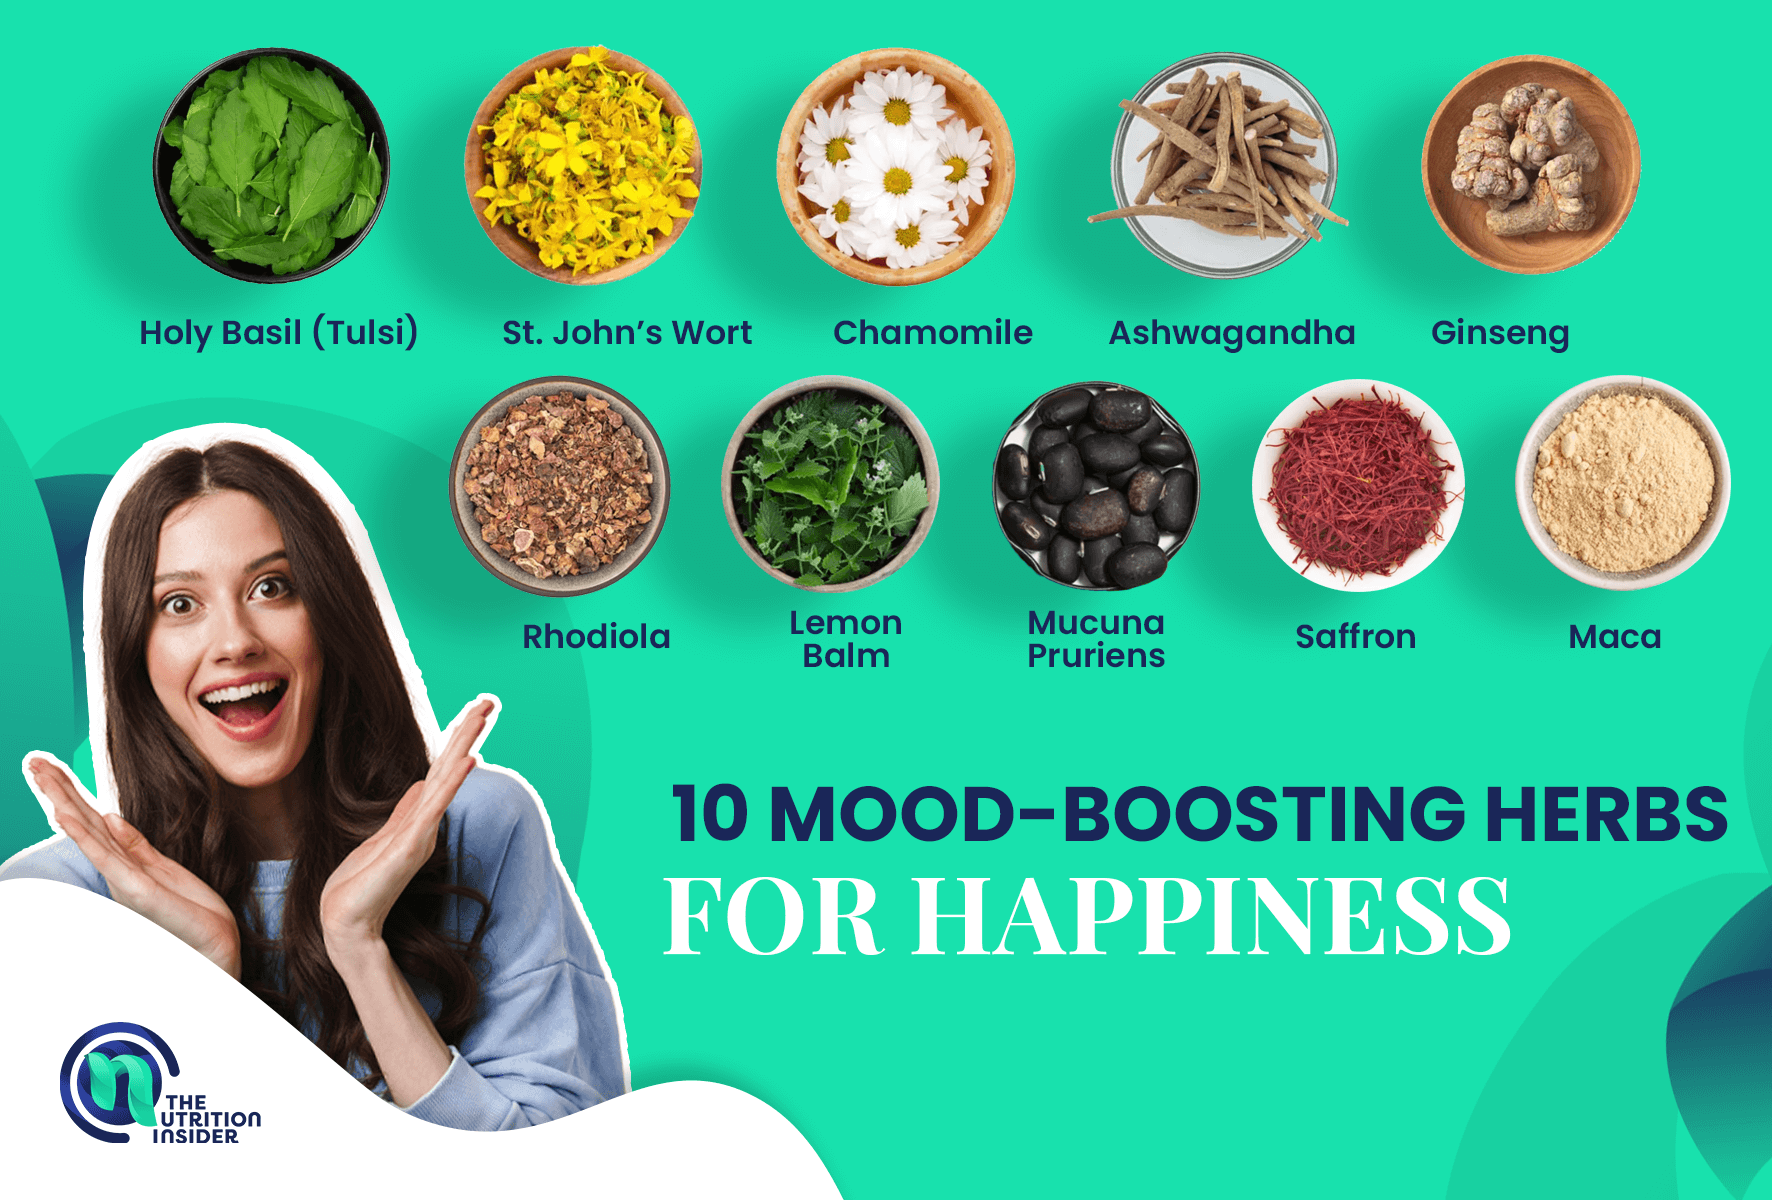 10 herbs for happiness include holy basil, st john's wort, chamomile, ashwagandha, ginseng, rhodiola, lemon balm, mucuna pruriens, saffron, maca